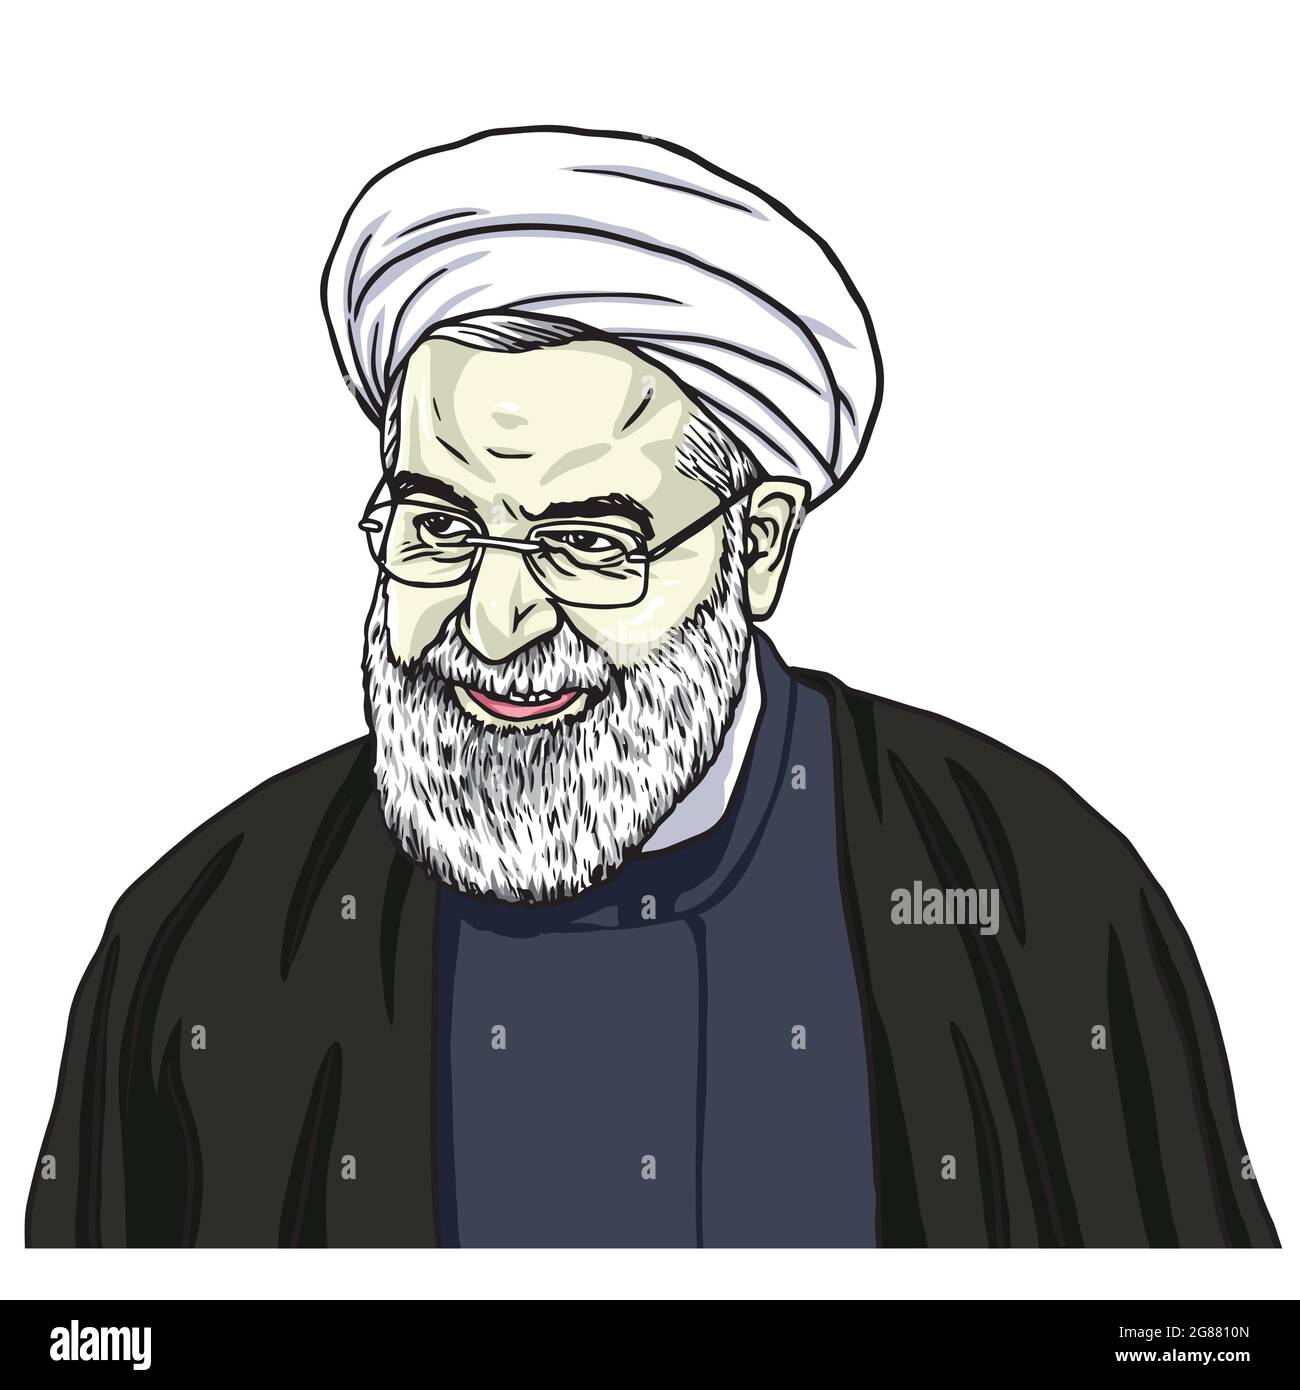 Hassan Rouhani Vector Portrait Drawing Cartoon Caricature Illustration Stock Vector